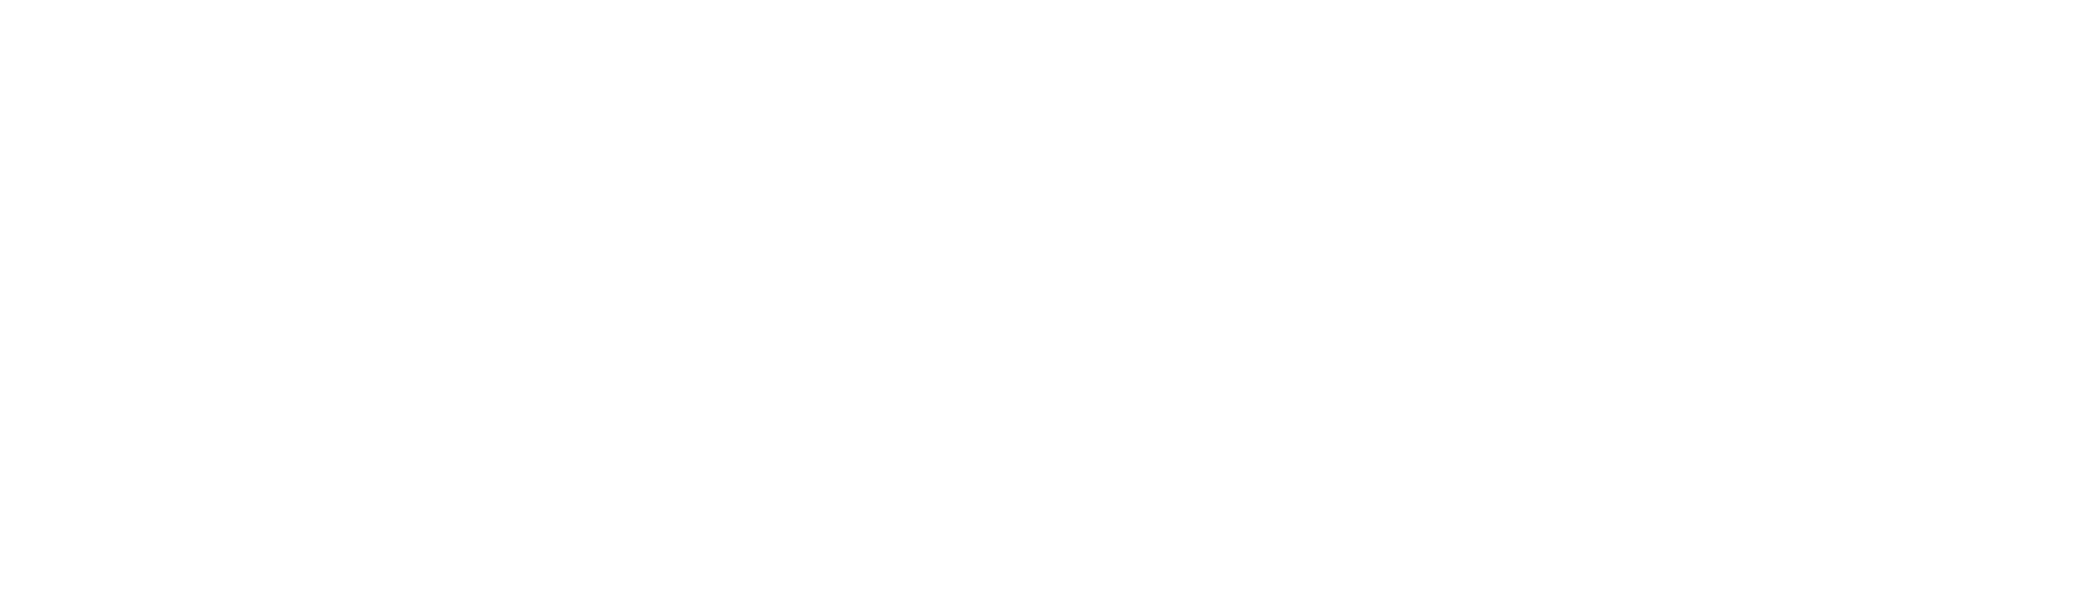 Heckya Media Group